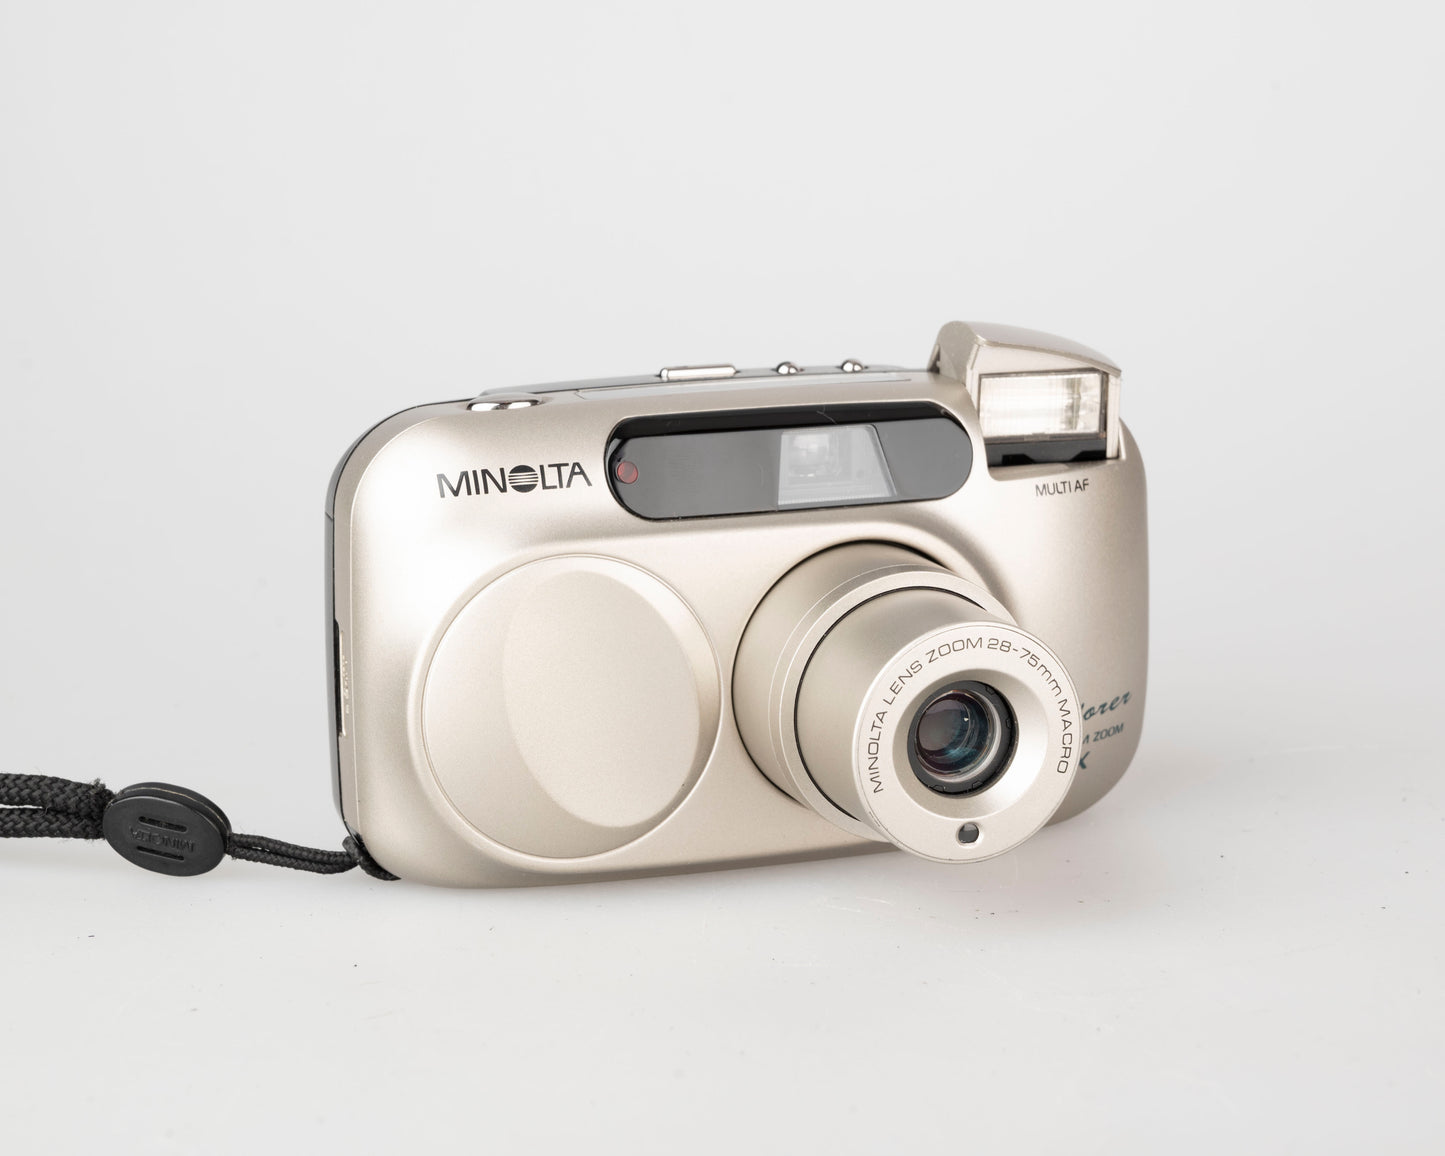 Minolta Freedom Zoom Explorer EX 35mm camera w/ case (serial 35104509)